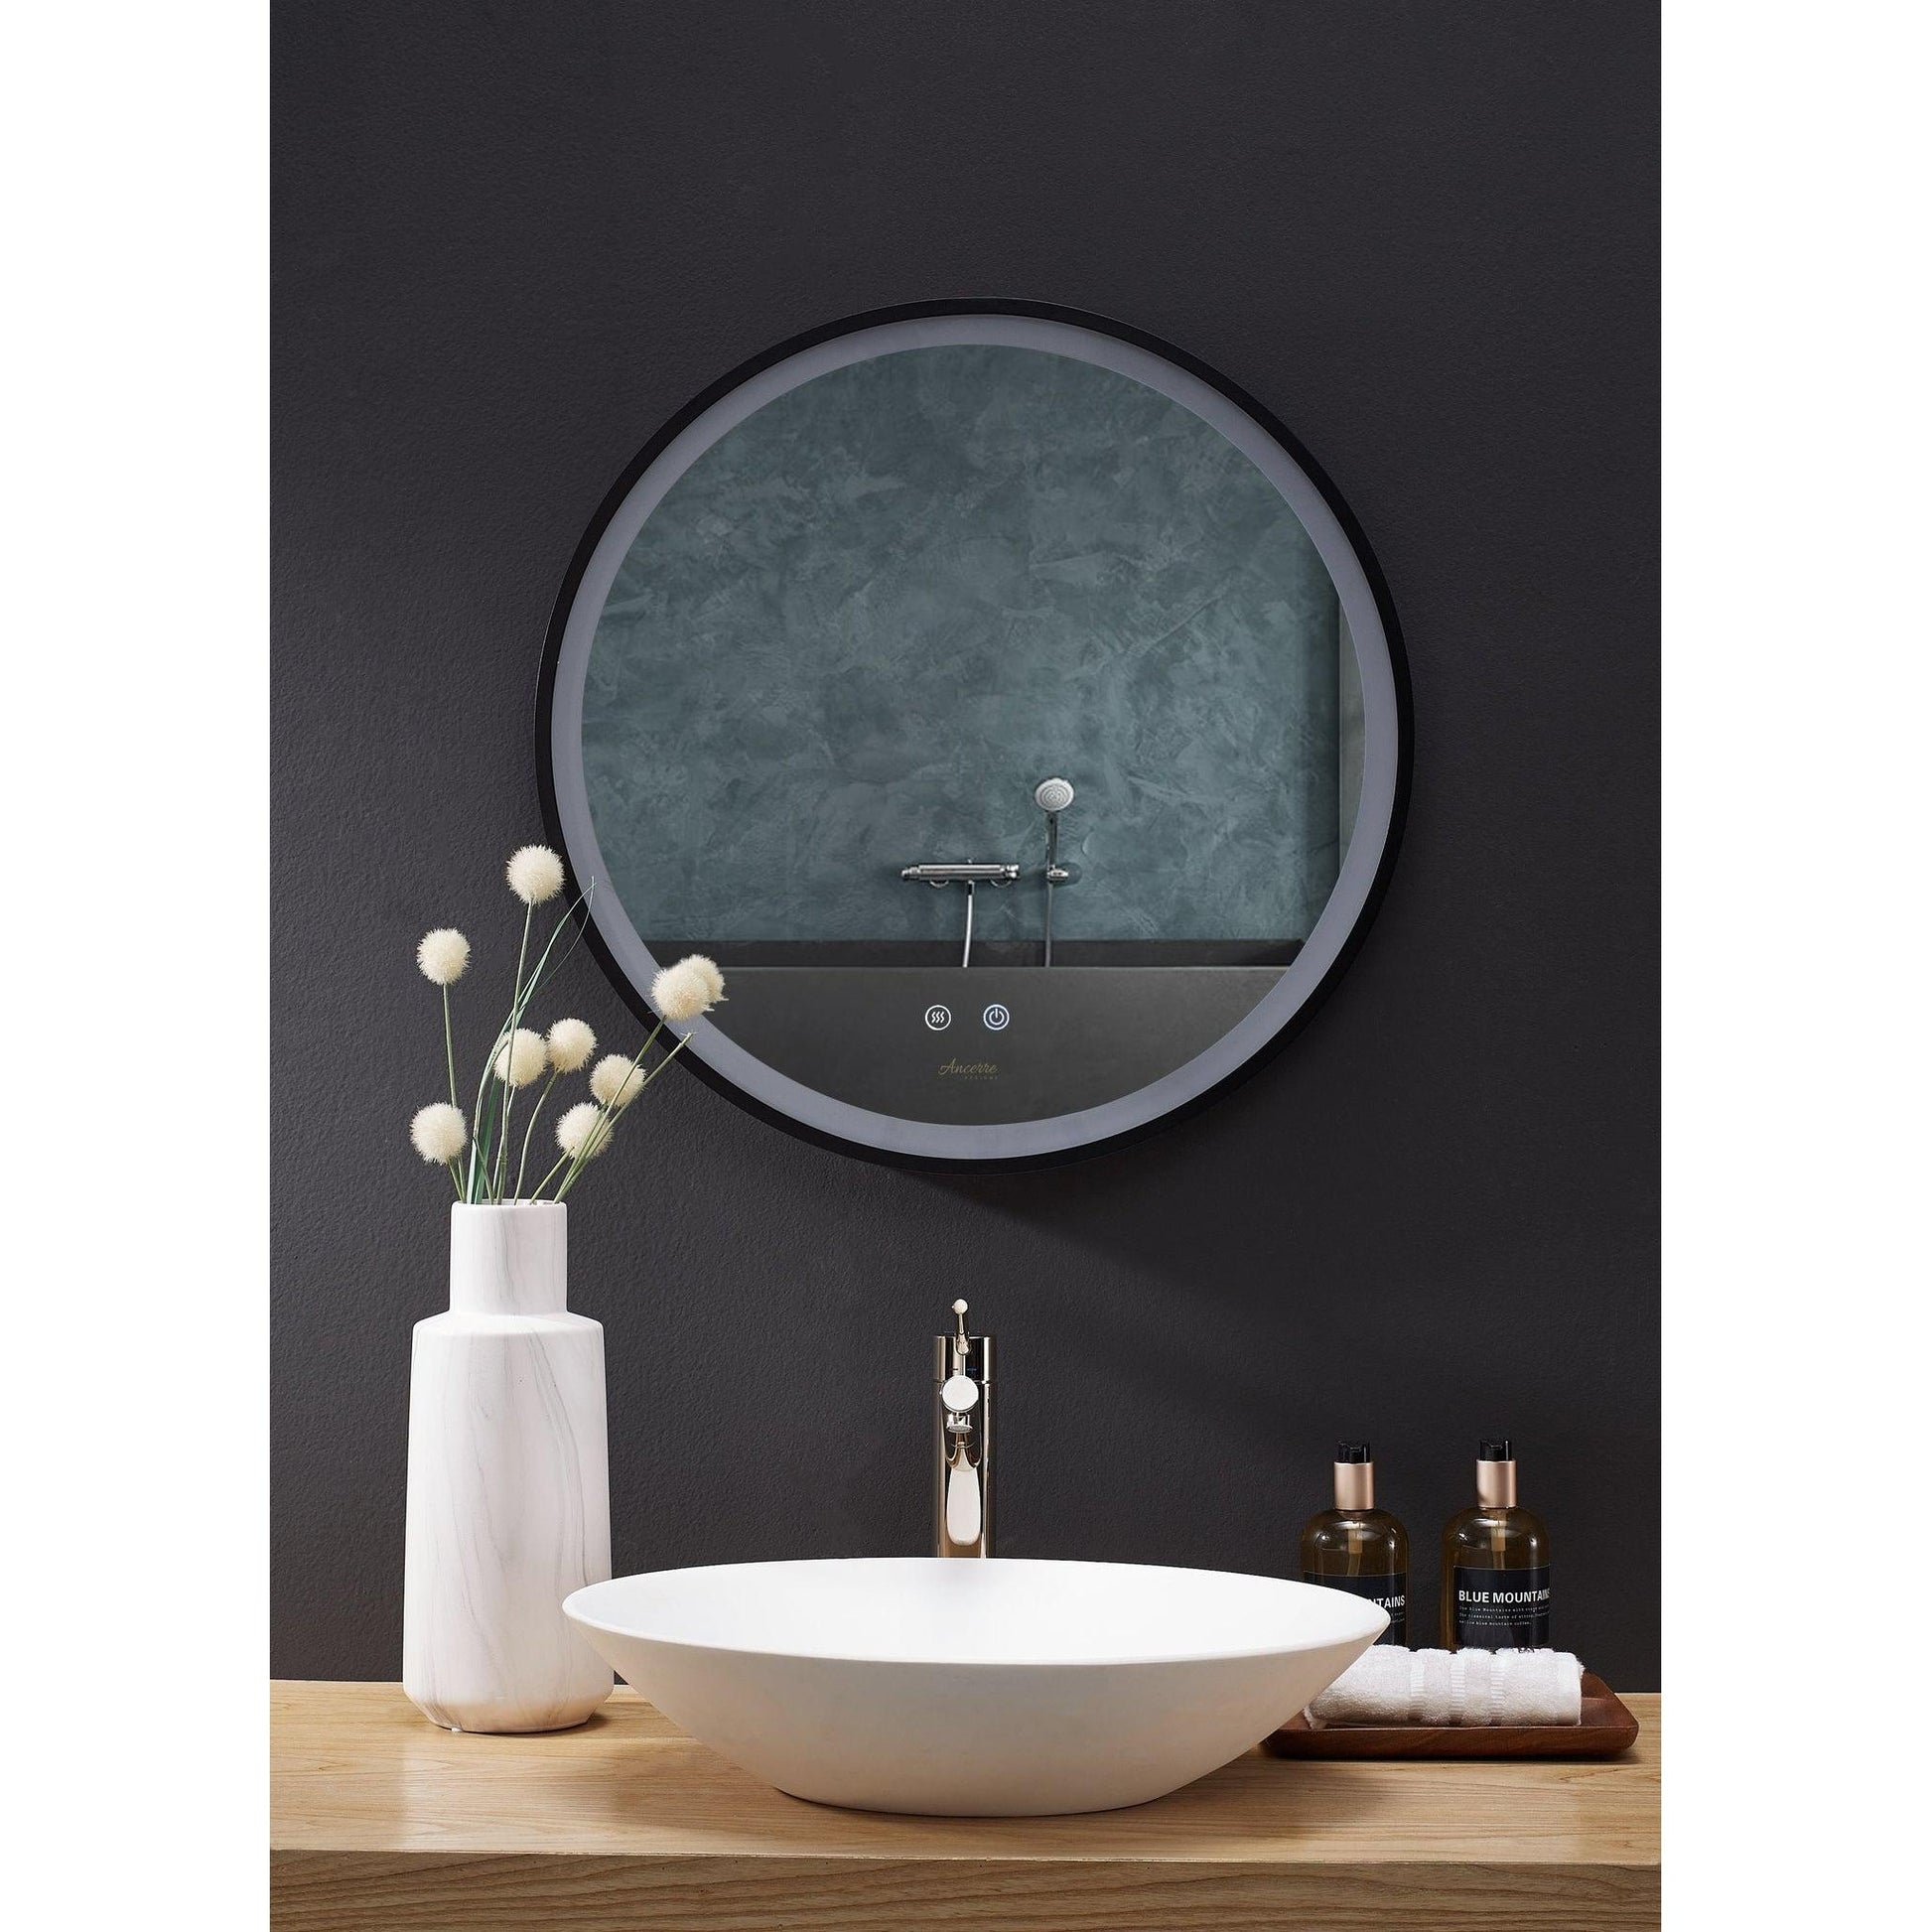 Ancerre Designs Cirque 30" Modern Round LED Lighted Black Framed Bathroom Vanity Mirror With Defogger, Dimmer and Mounting Hardware